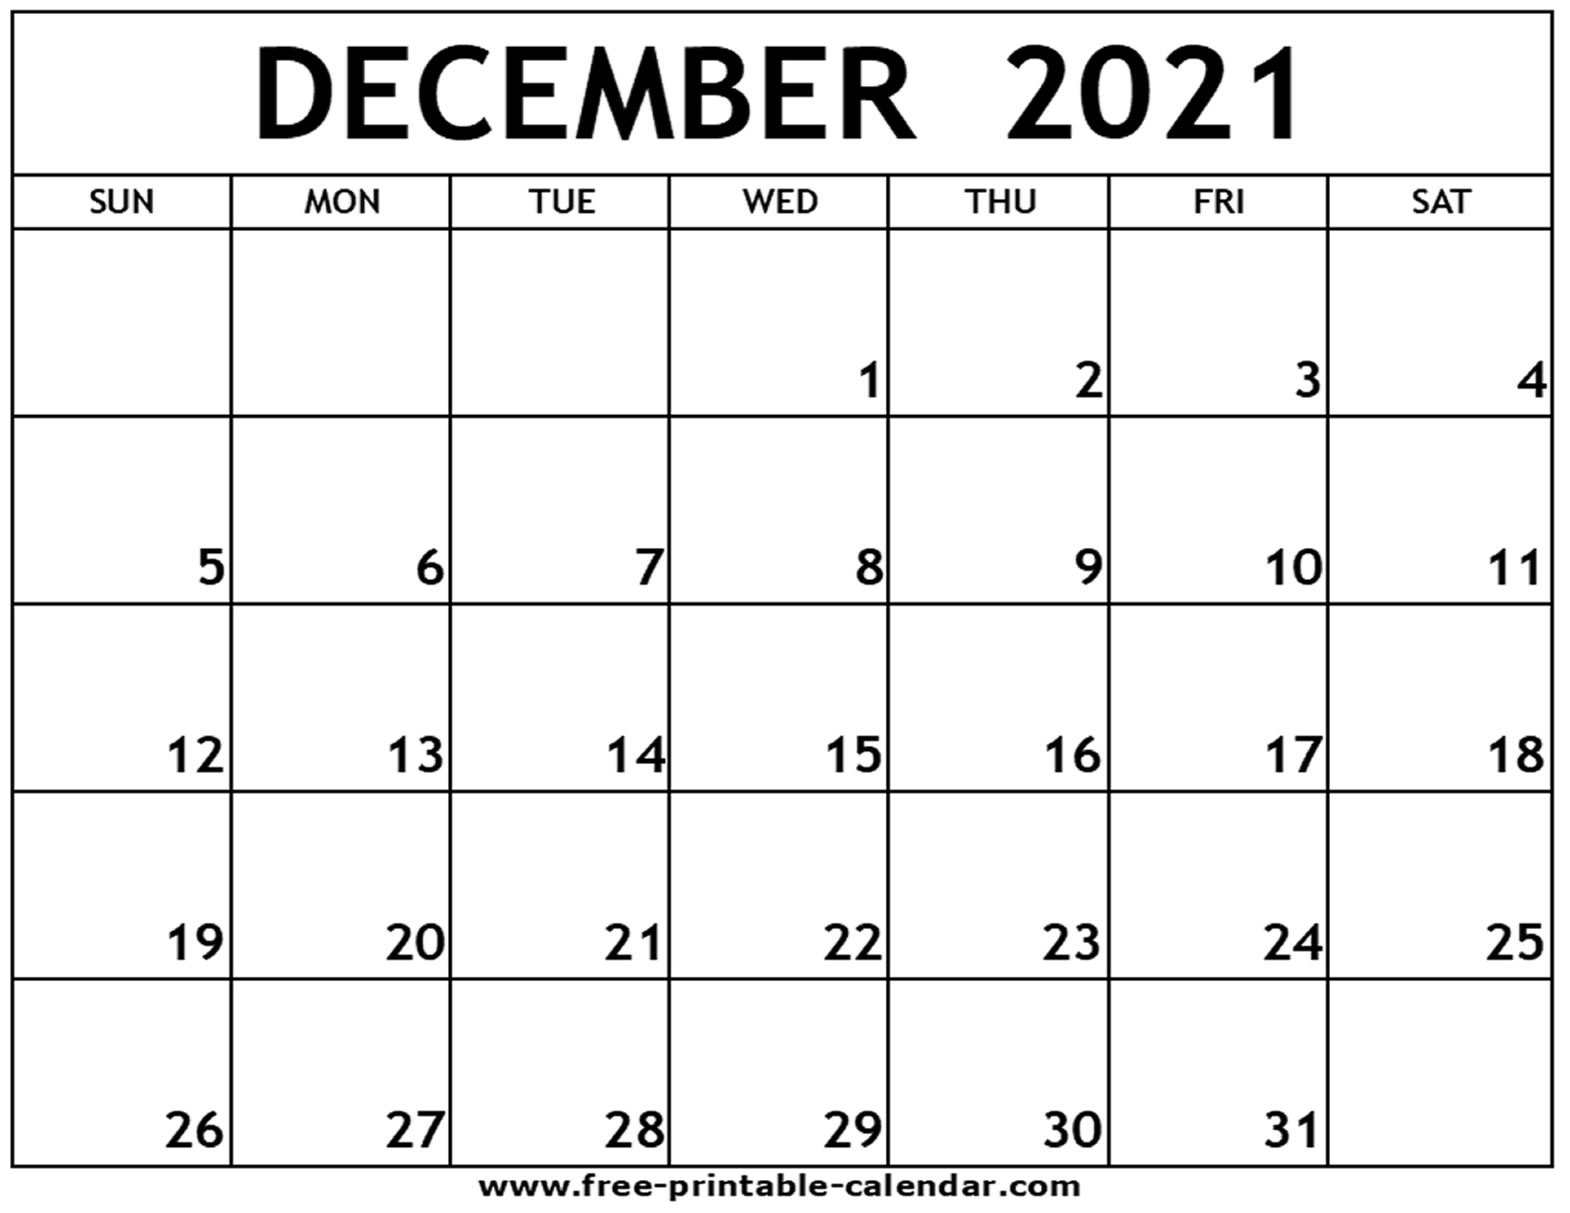 Get Free Printable Monthly Calendar December 2021